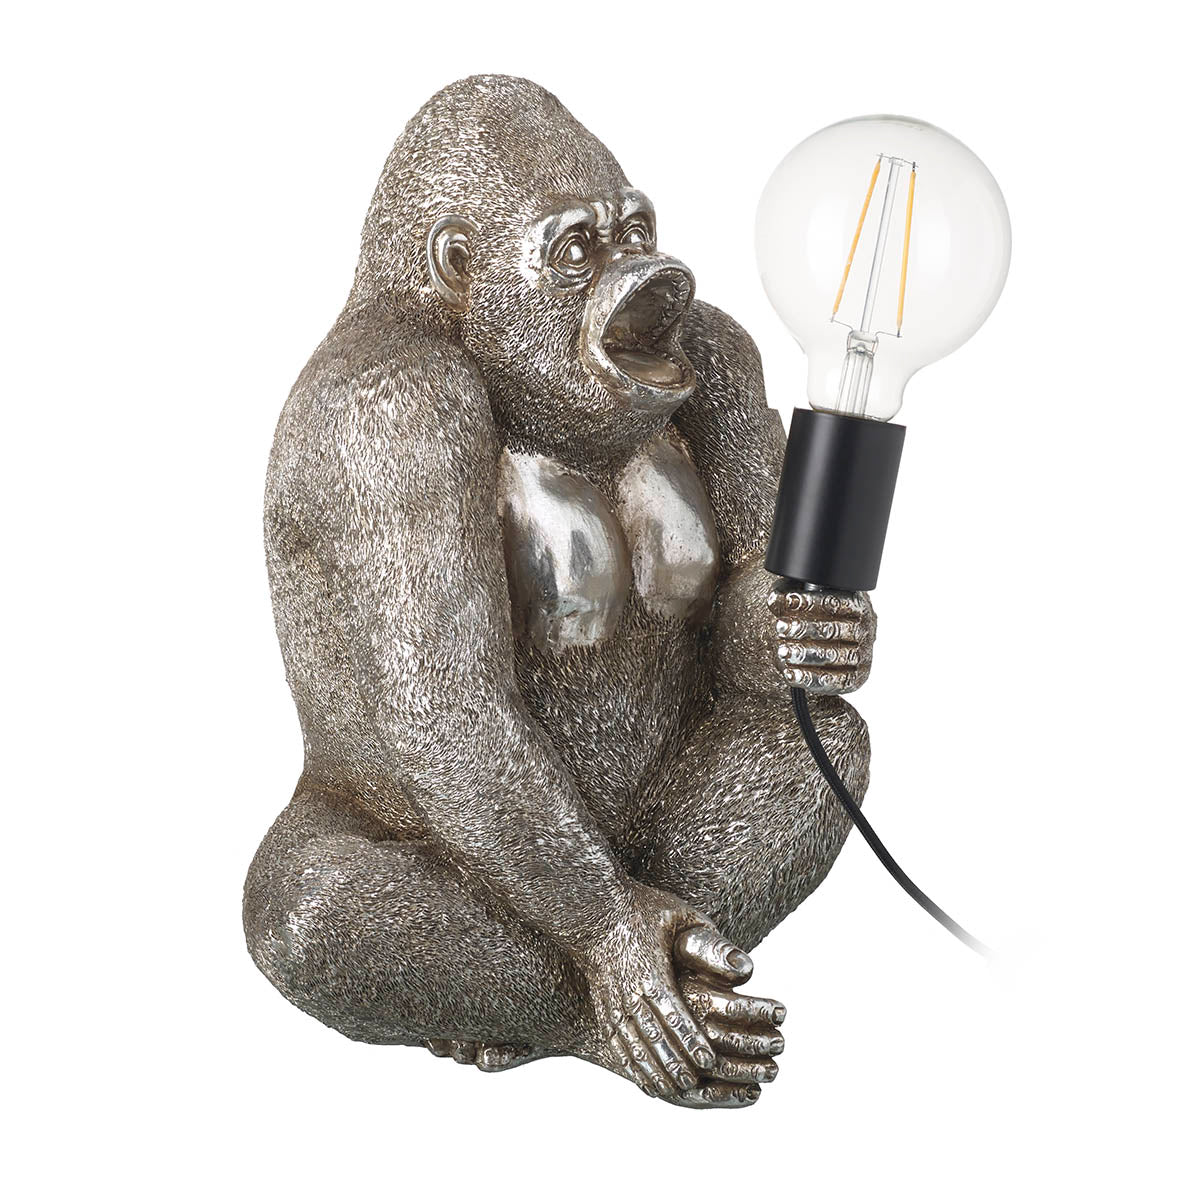 Elton the Gorilla Lamp by Parlane